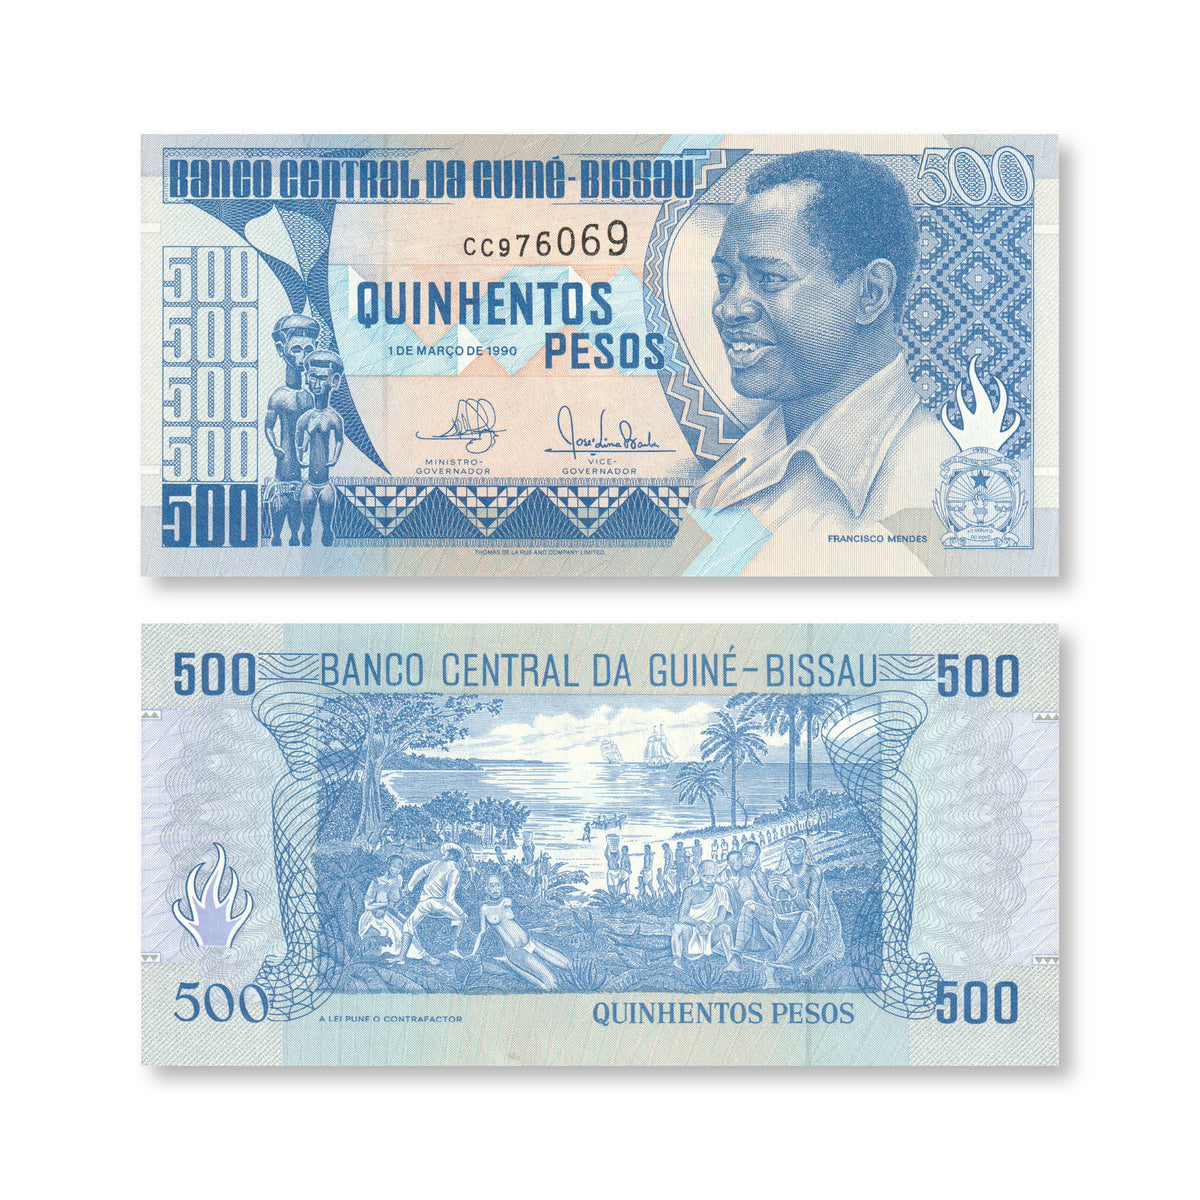 Guinea-Bissau 500 Pesos, 1990, B203a, P12, UNC - Robert's World Money - World Banknotes